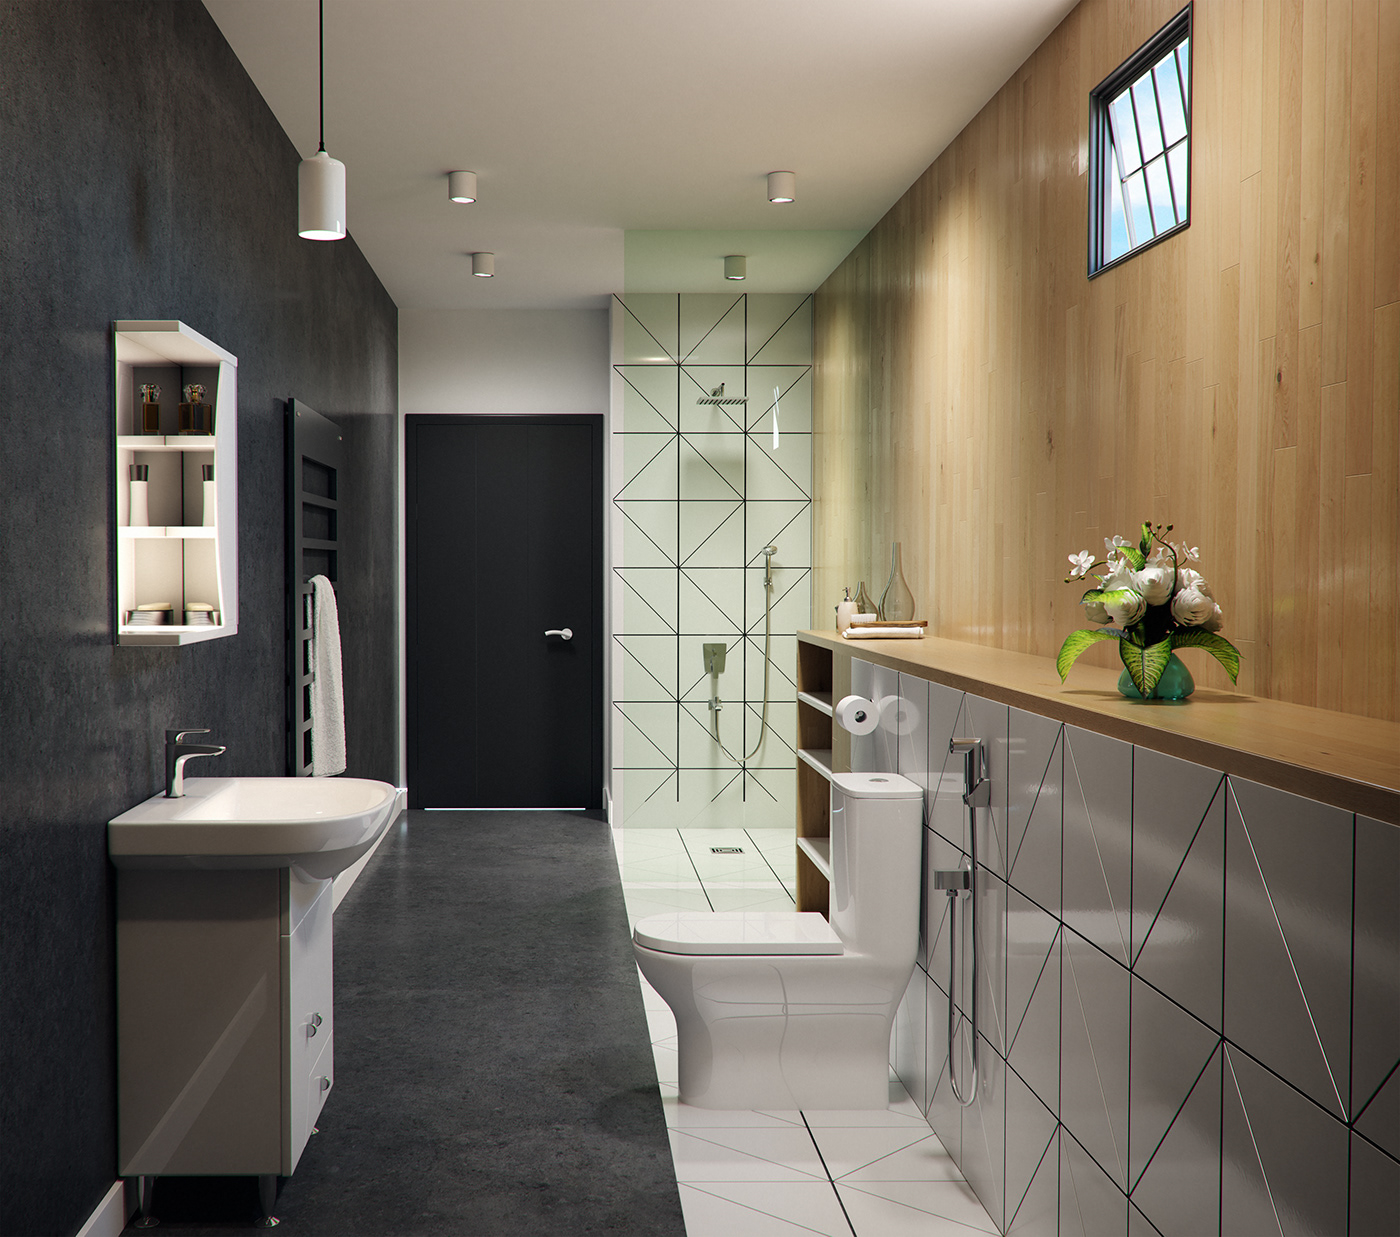 parryware bathrooms CGI 3D concept washrooms interiors products bathroomaccessories rendering